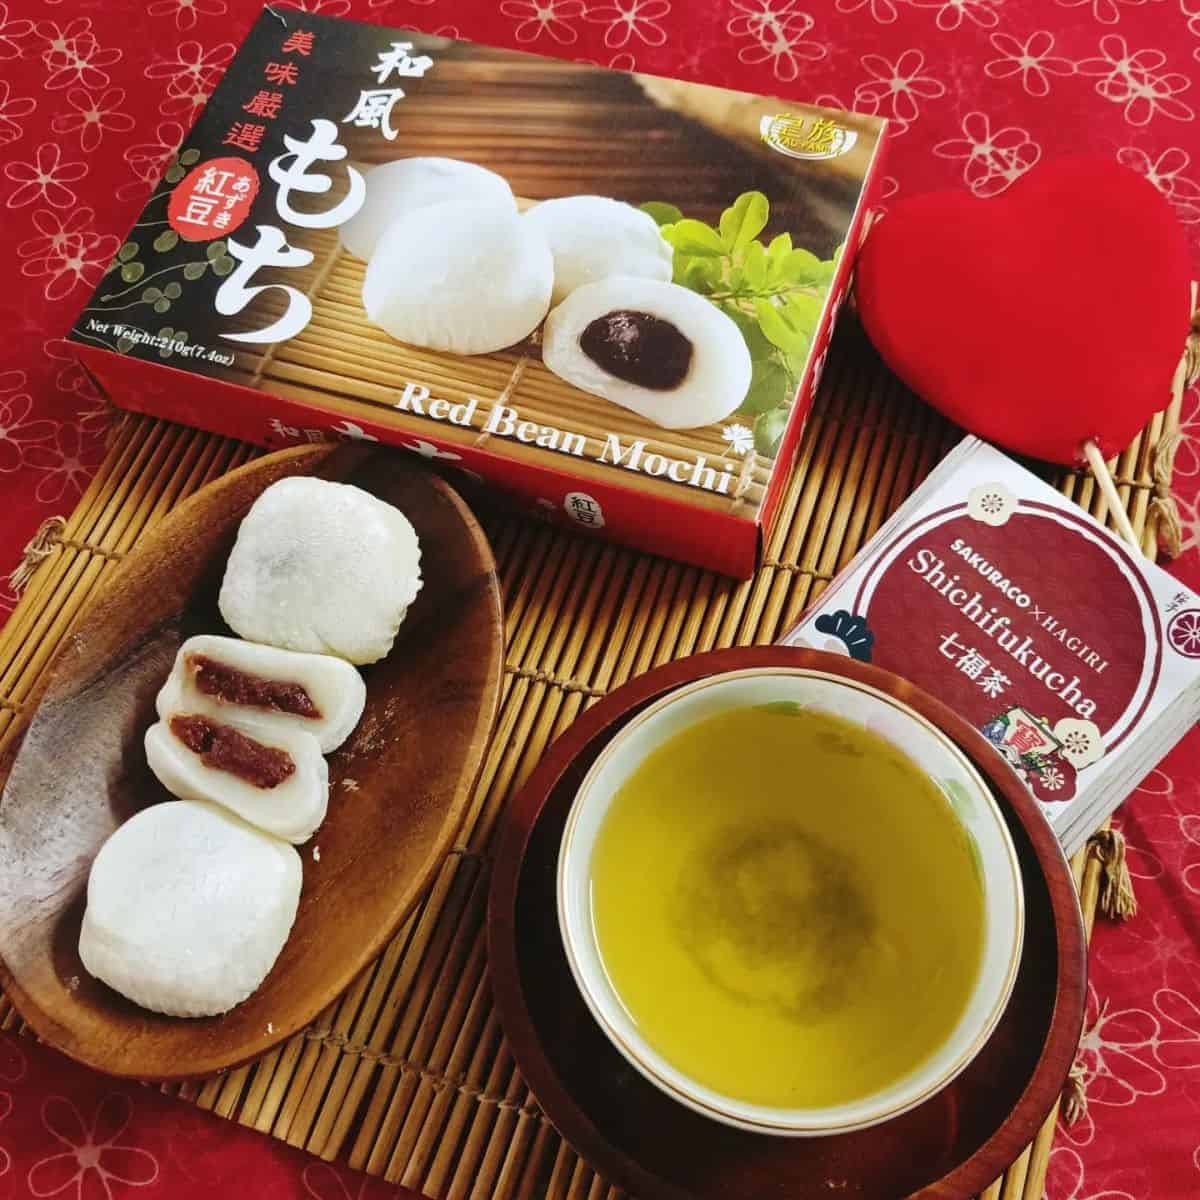 Sakuraco Japanese delight paired with tea drin